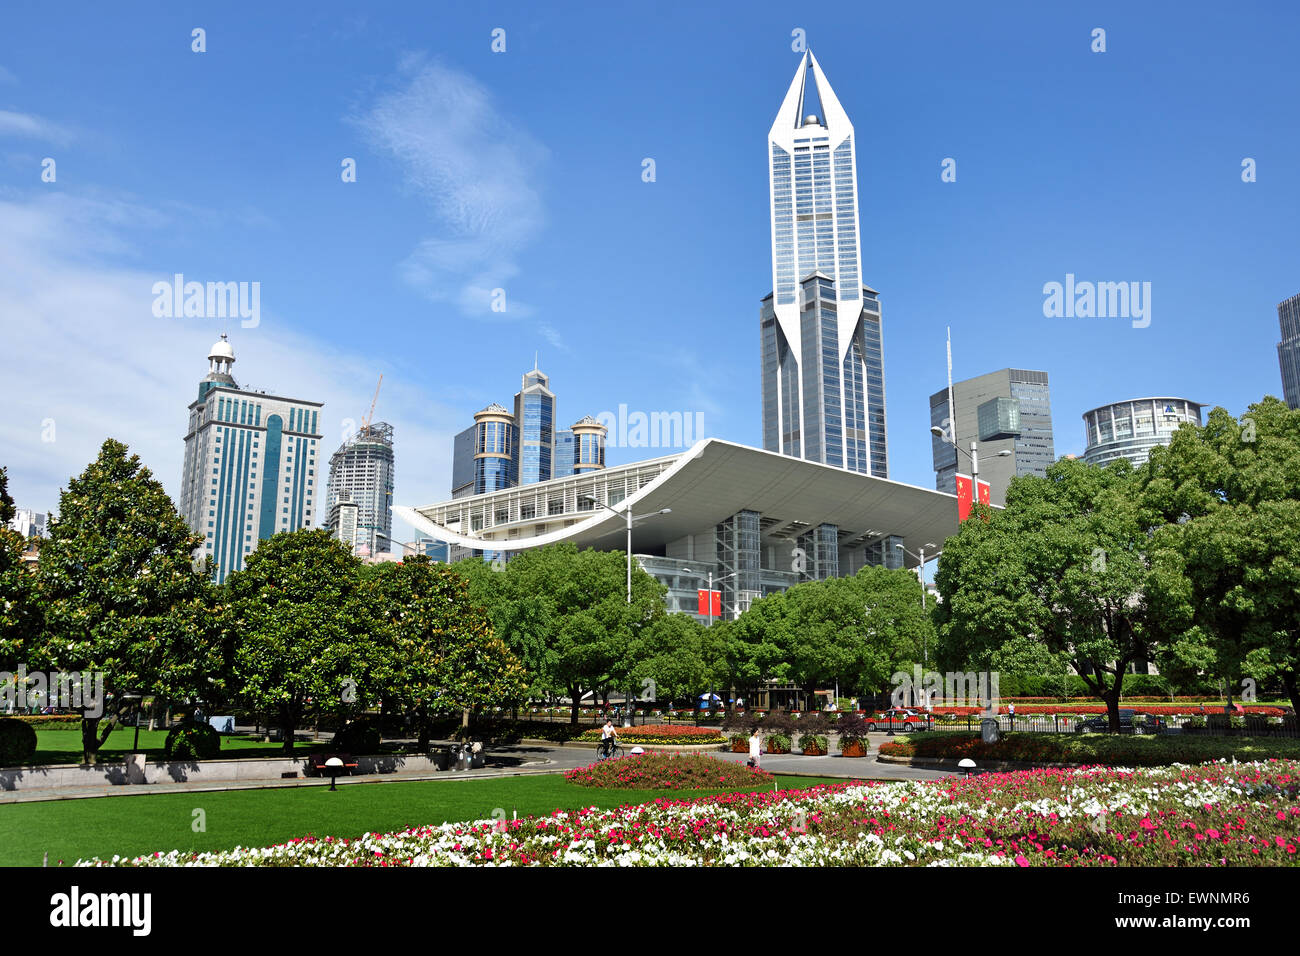 Shanghai Grand Theater Peoples Square in Huangpu District Shanghai China Chinesisch Stockfoto